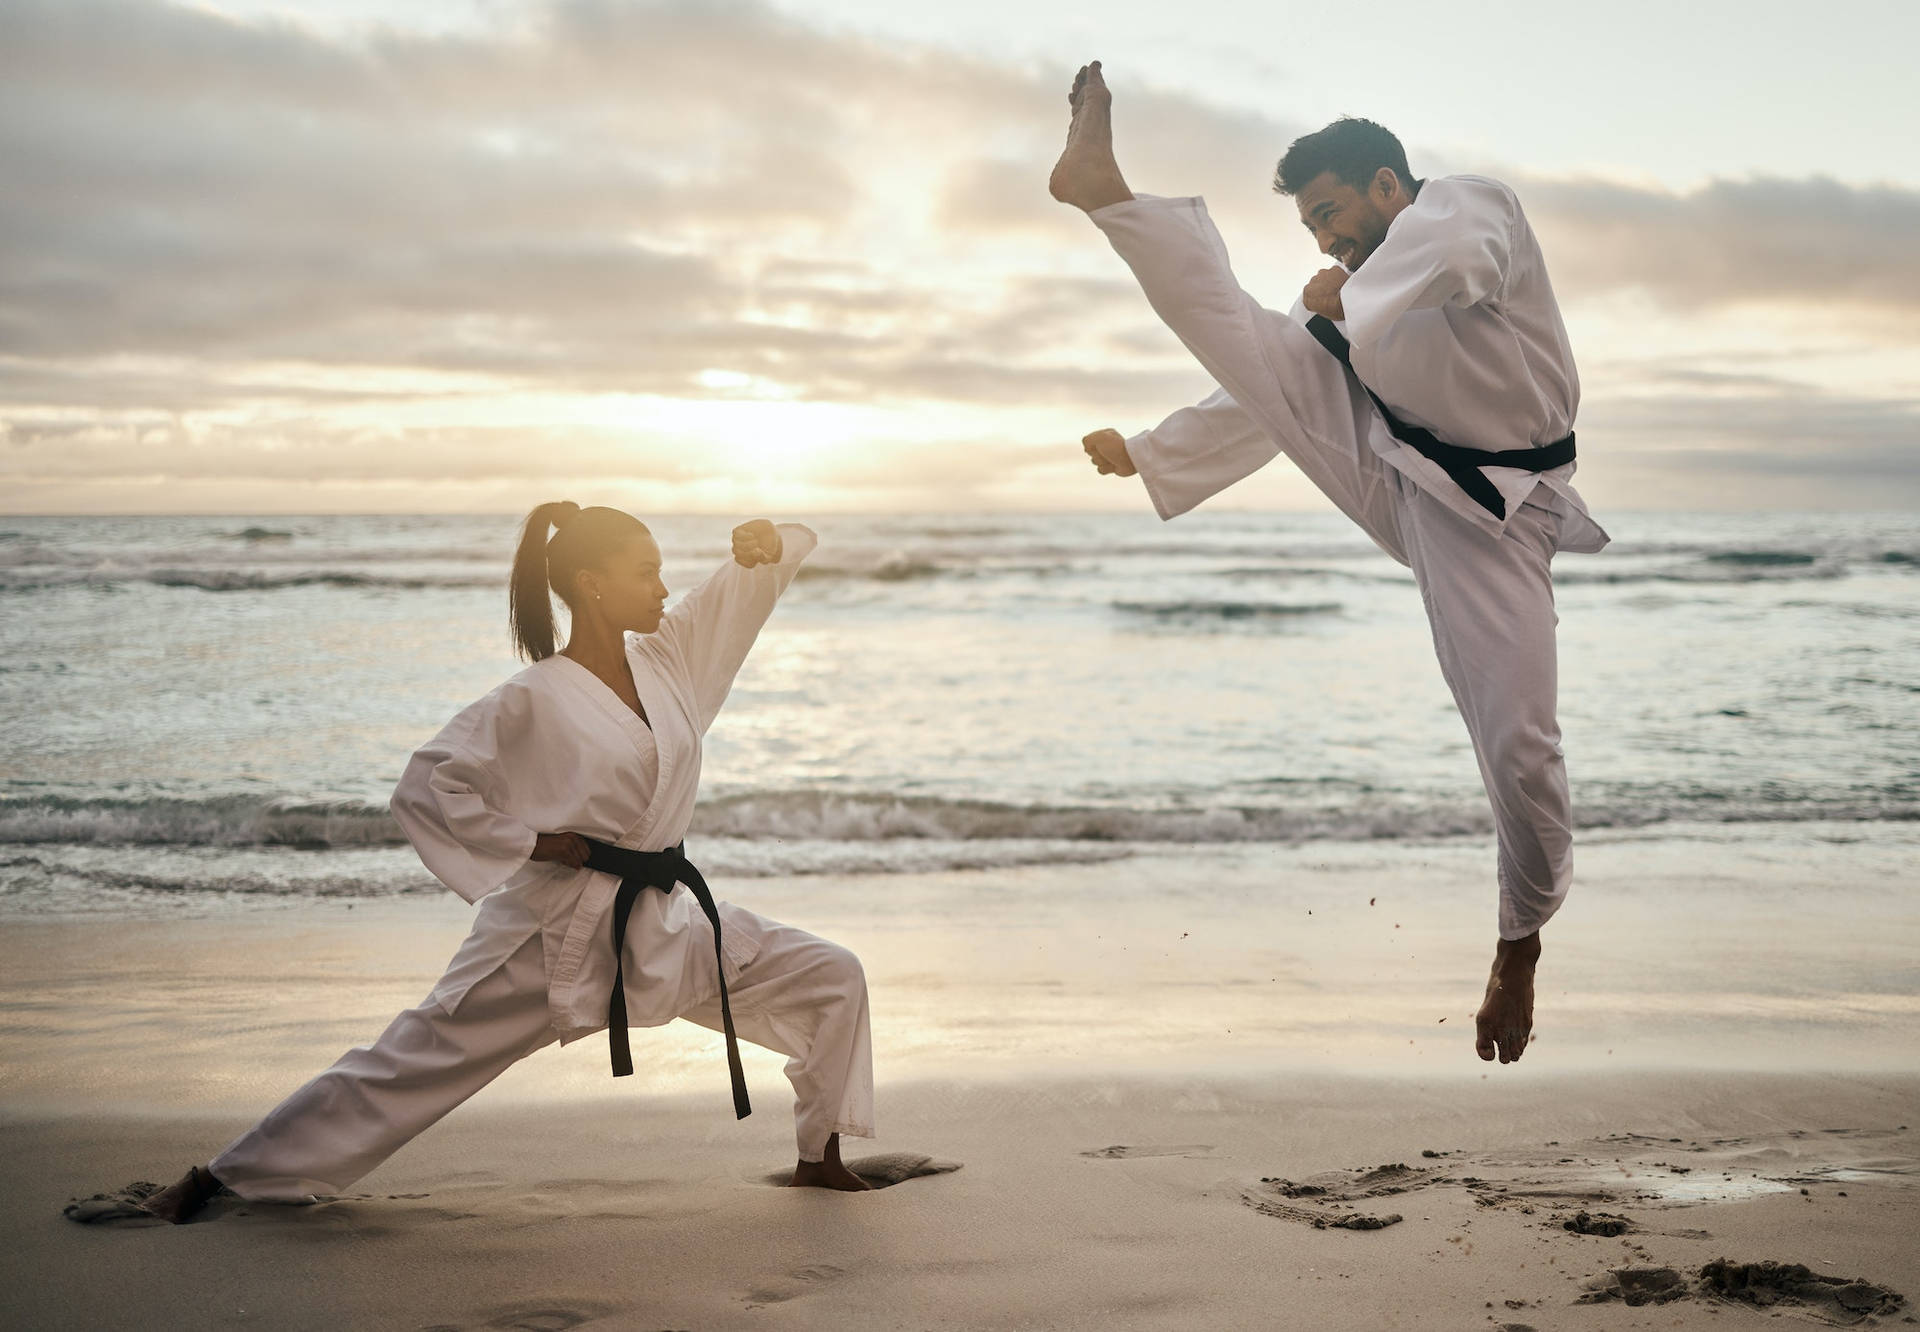 Karate Fight At Beach During Sunset Wallpaper